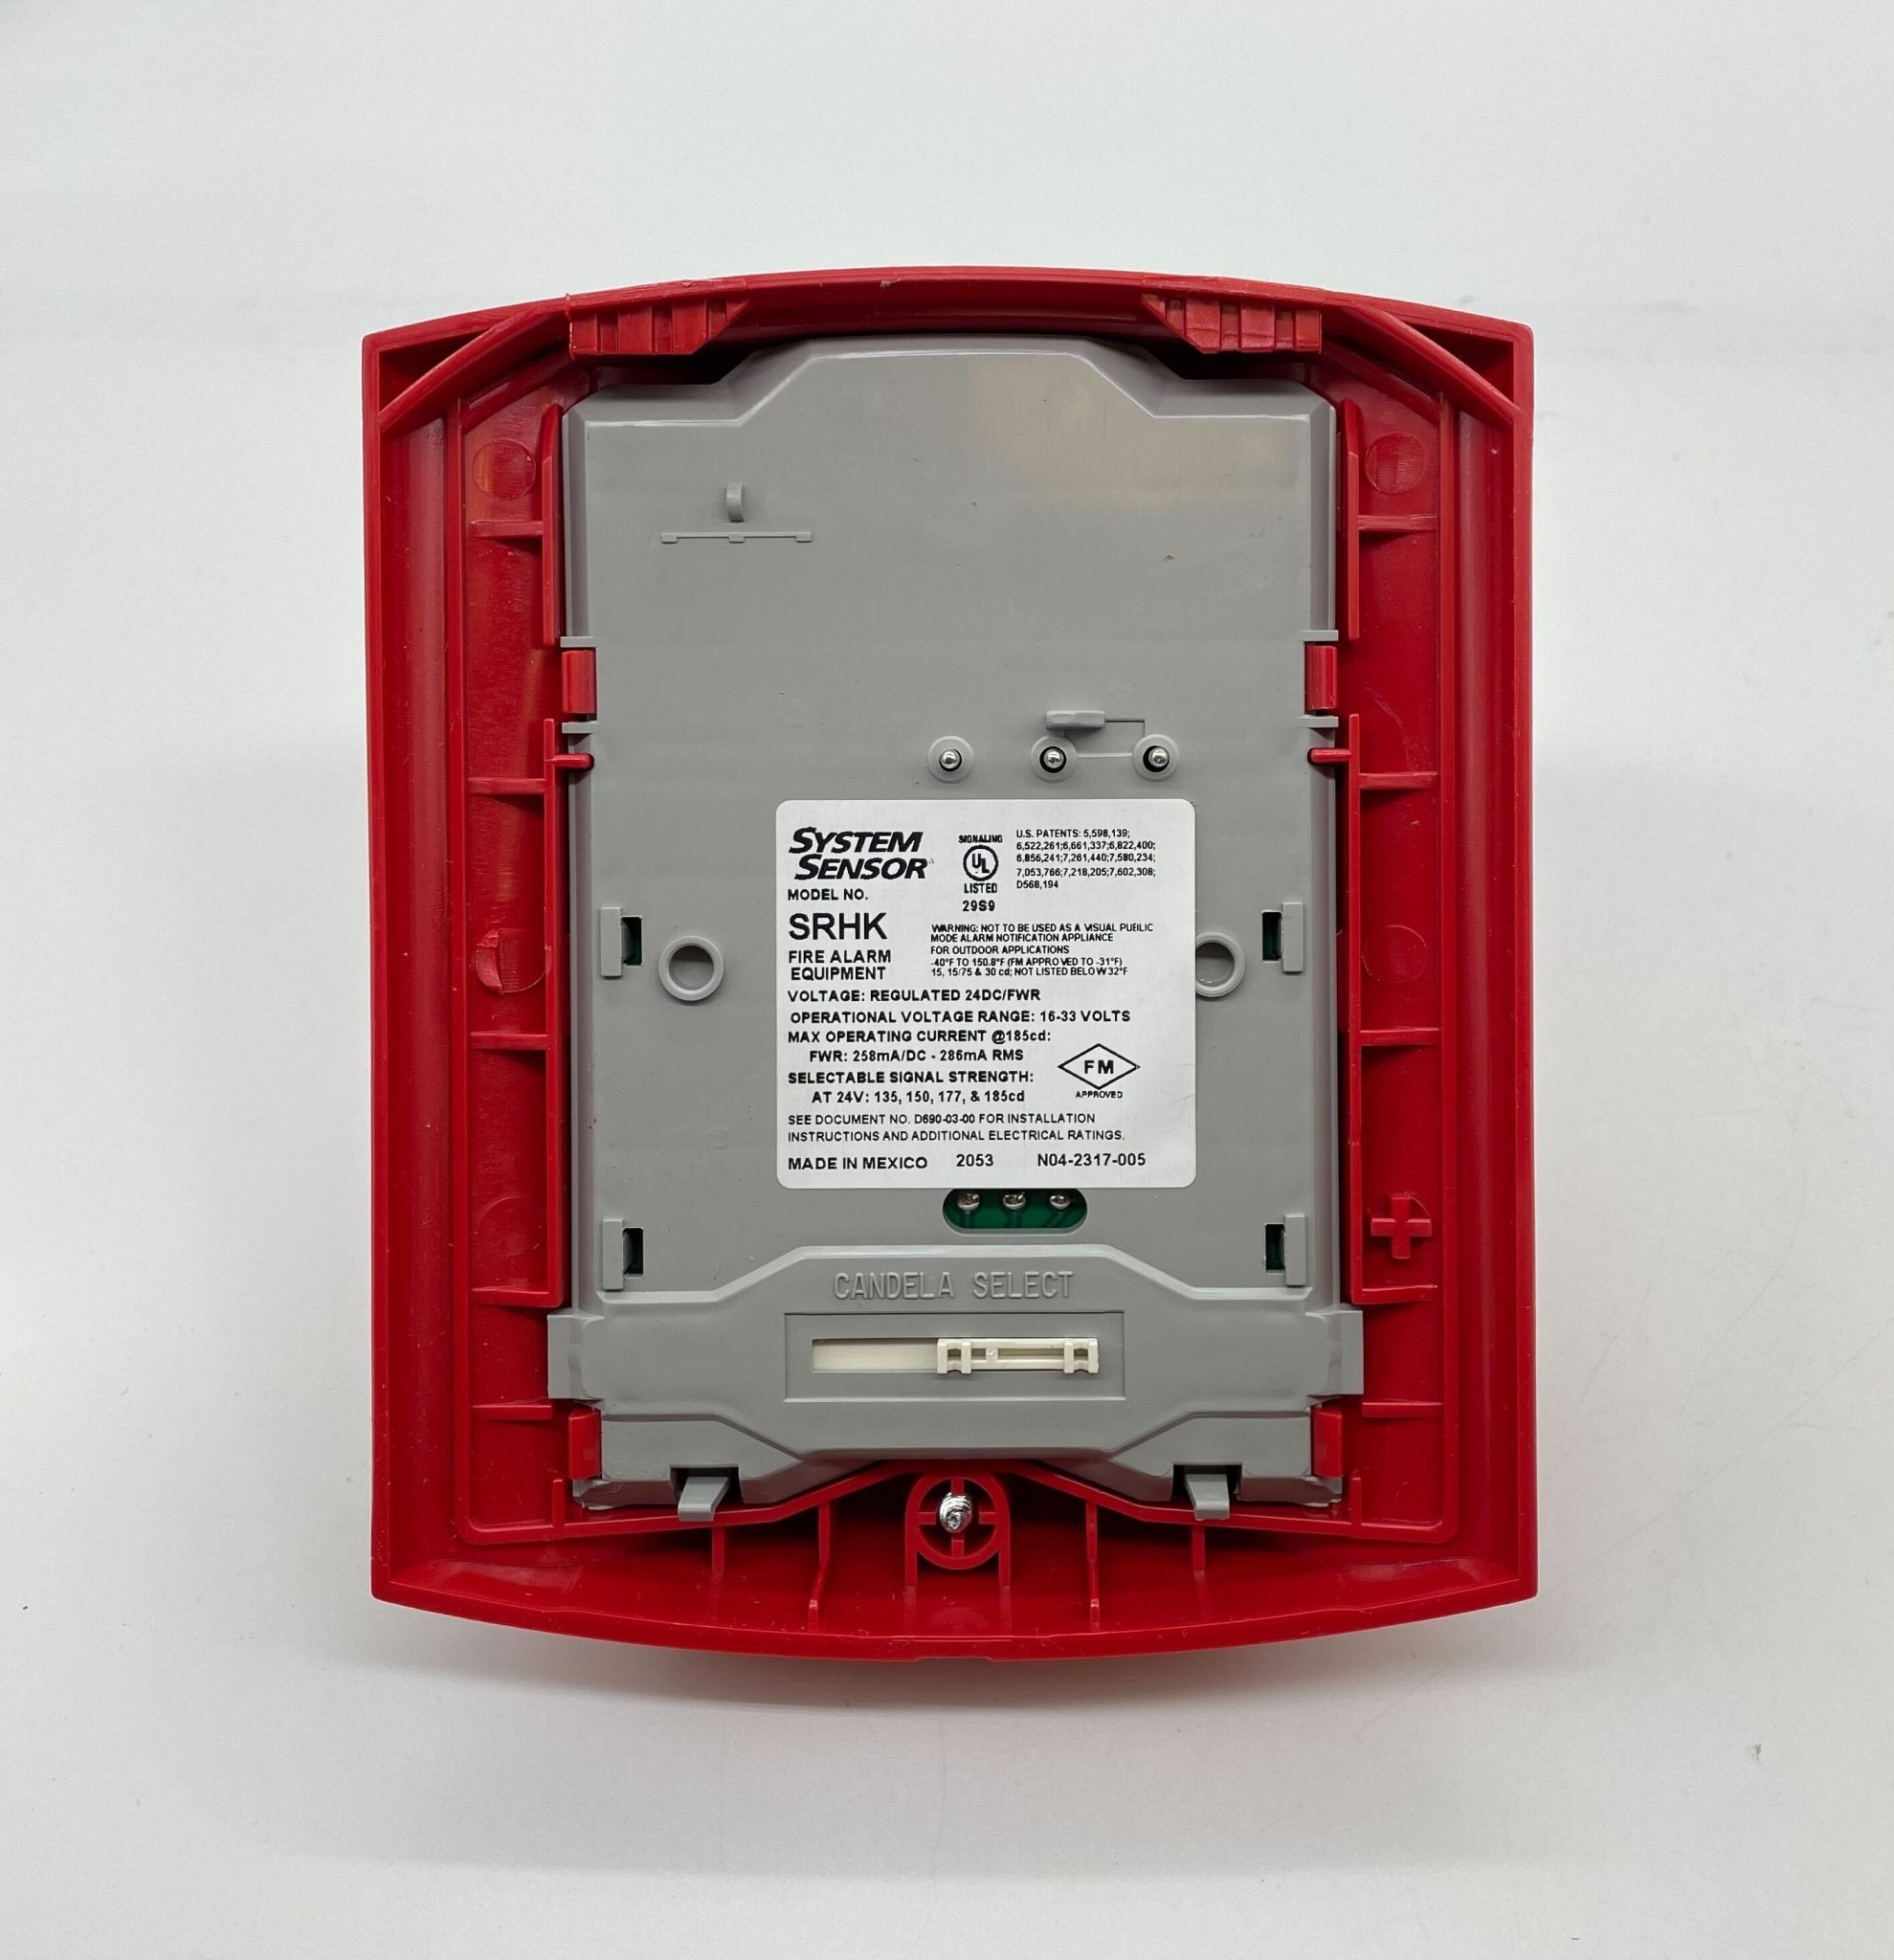 System Sensor SRHK - The Fire Alarm Supplier